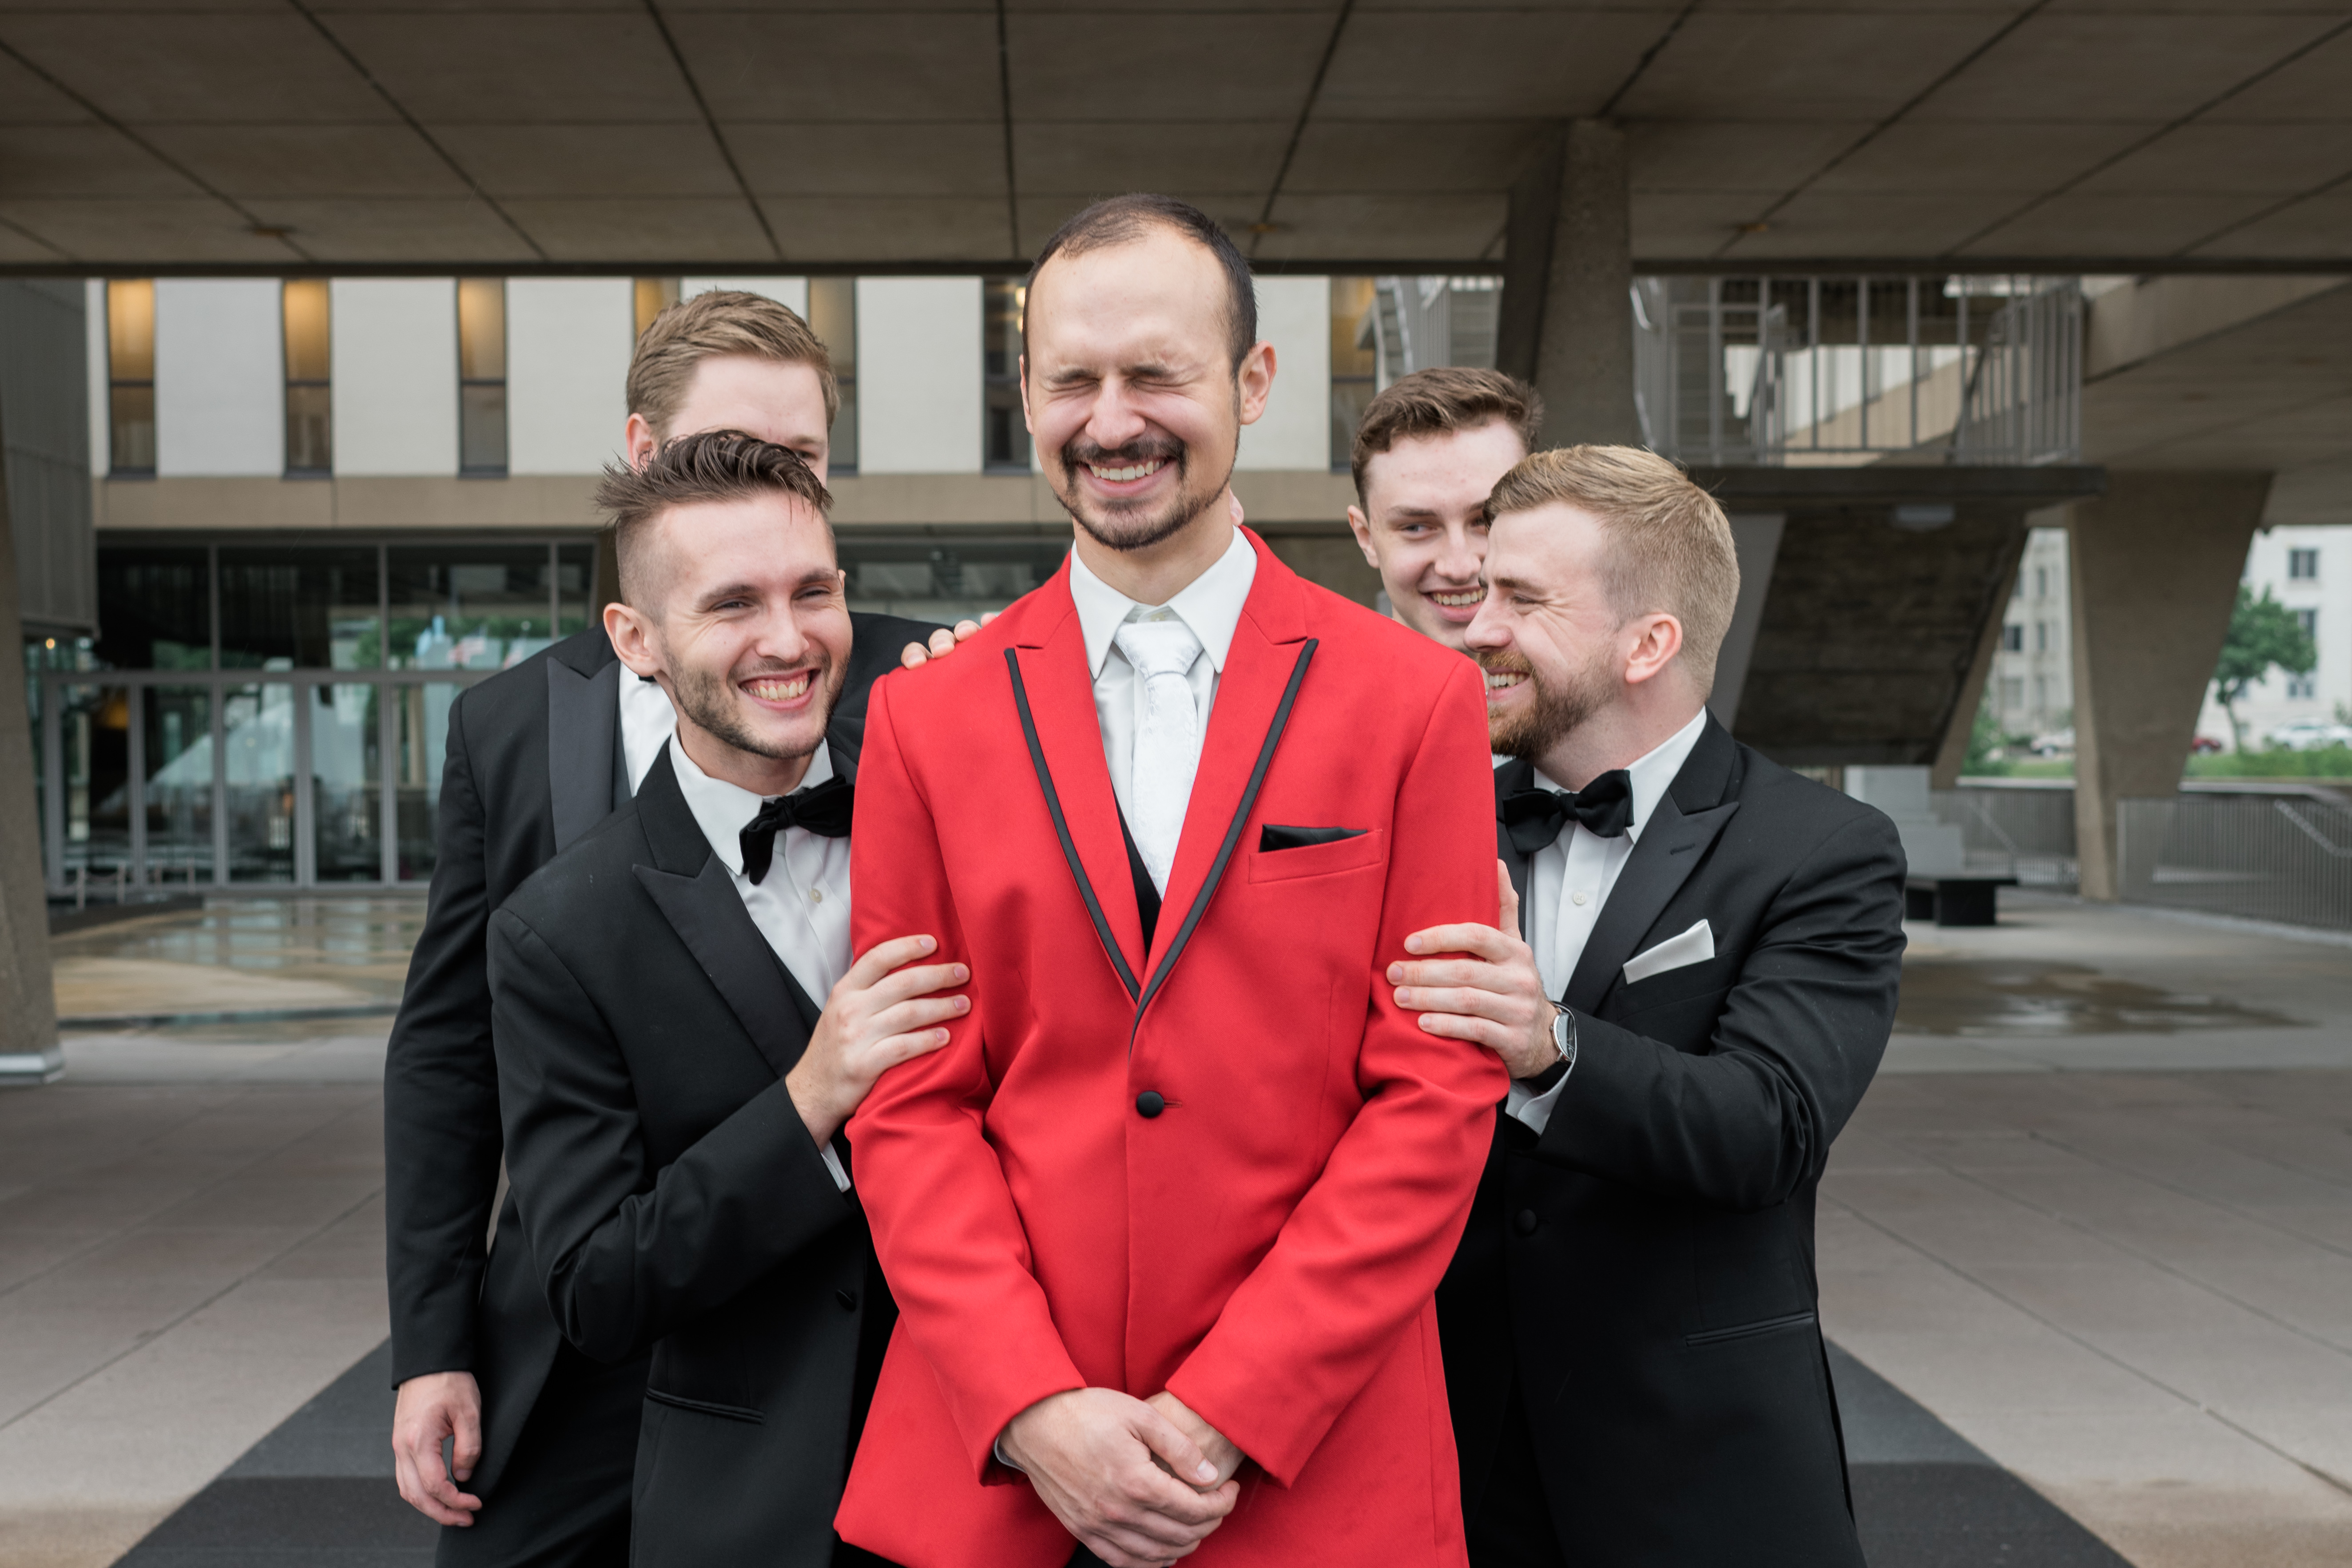 Groomsmen make groom laugh during bridal party photo